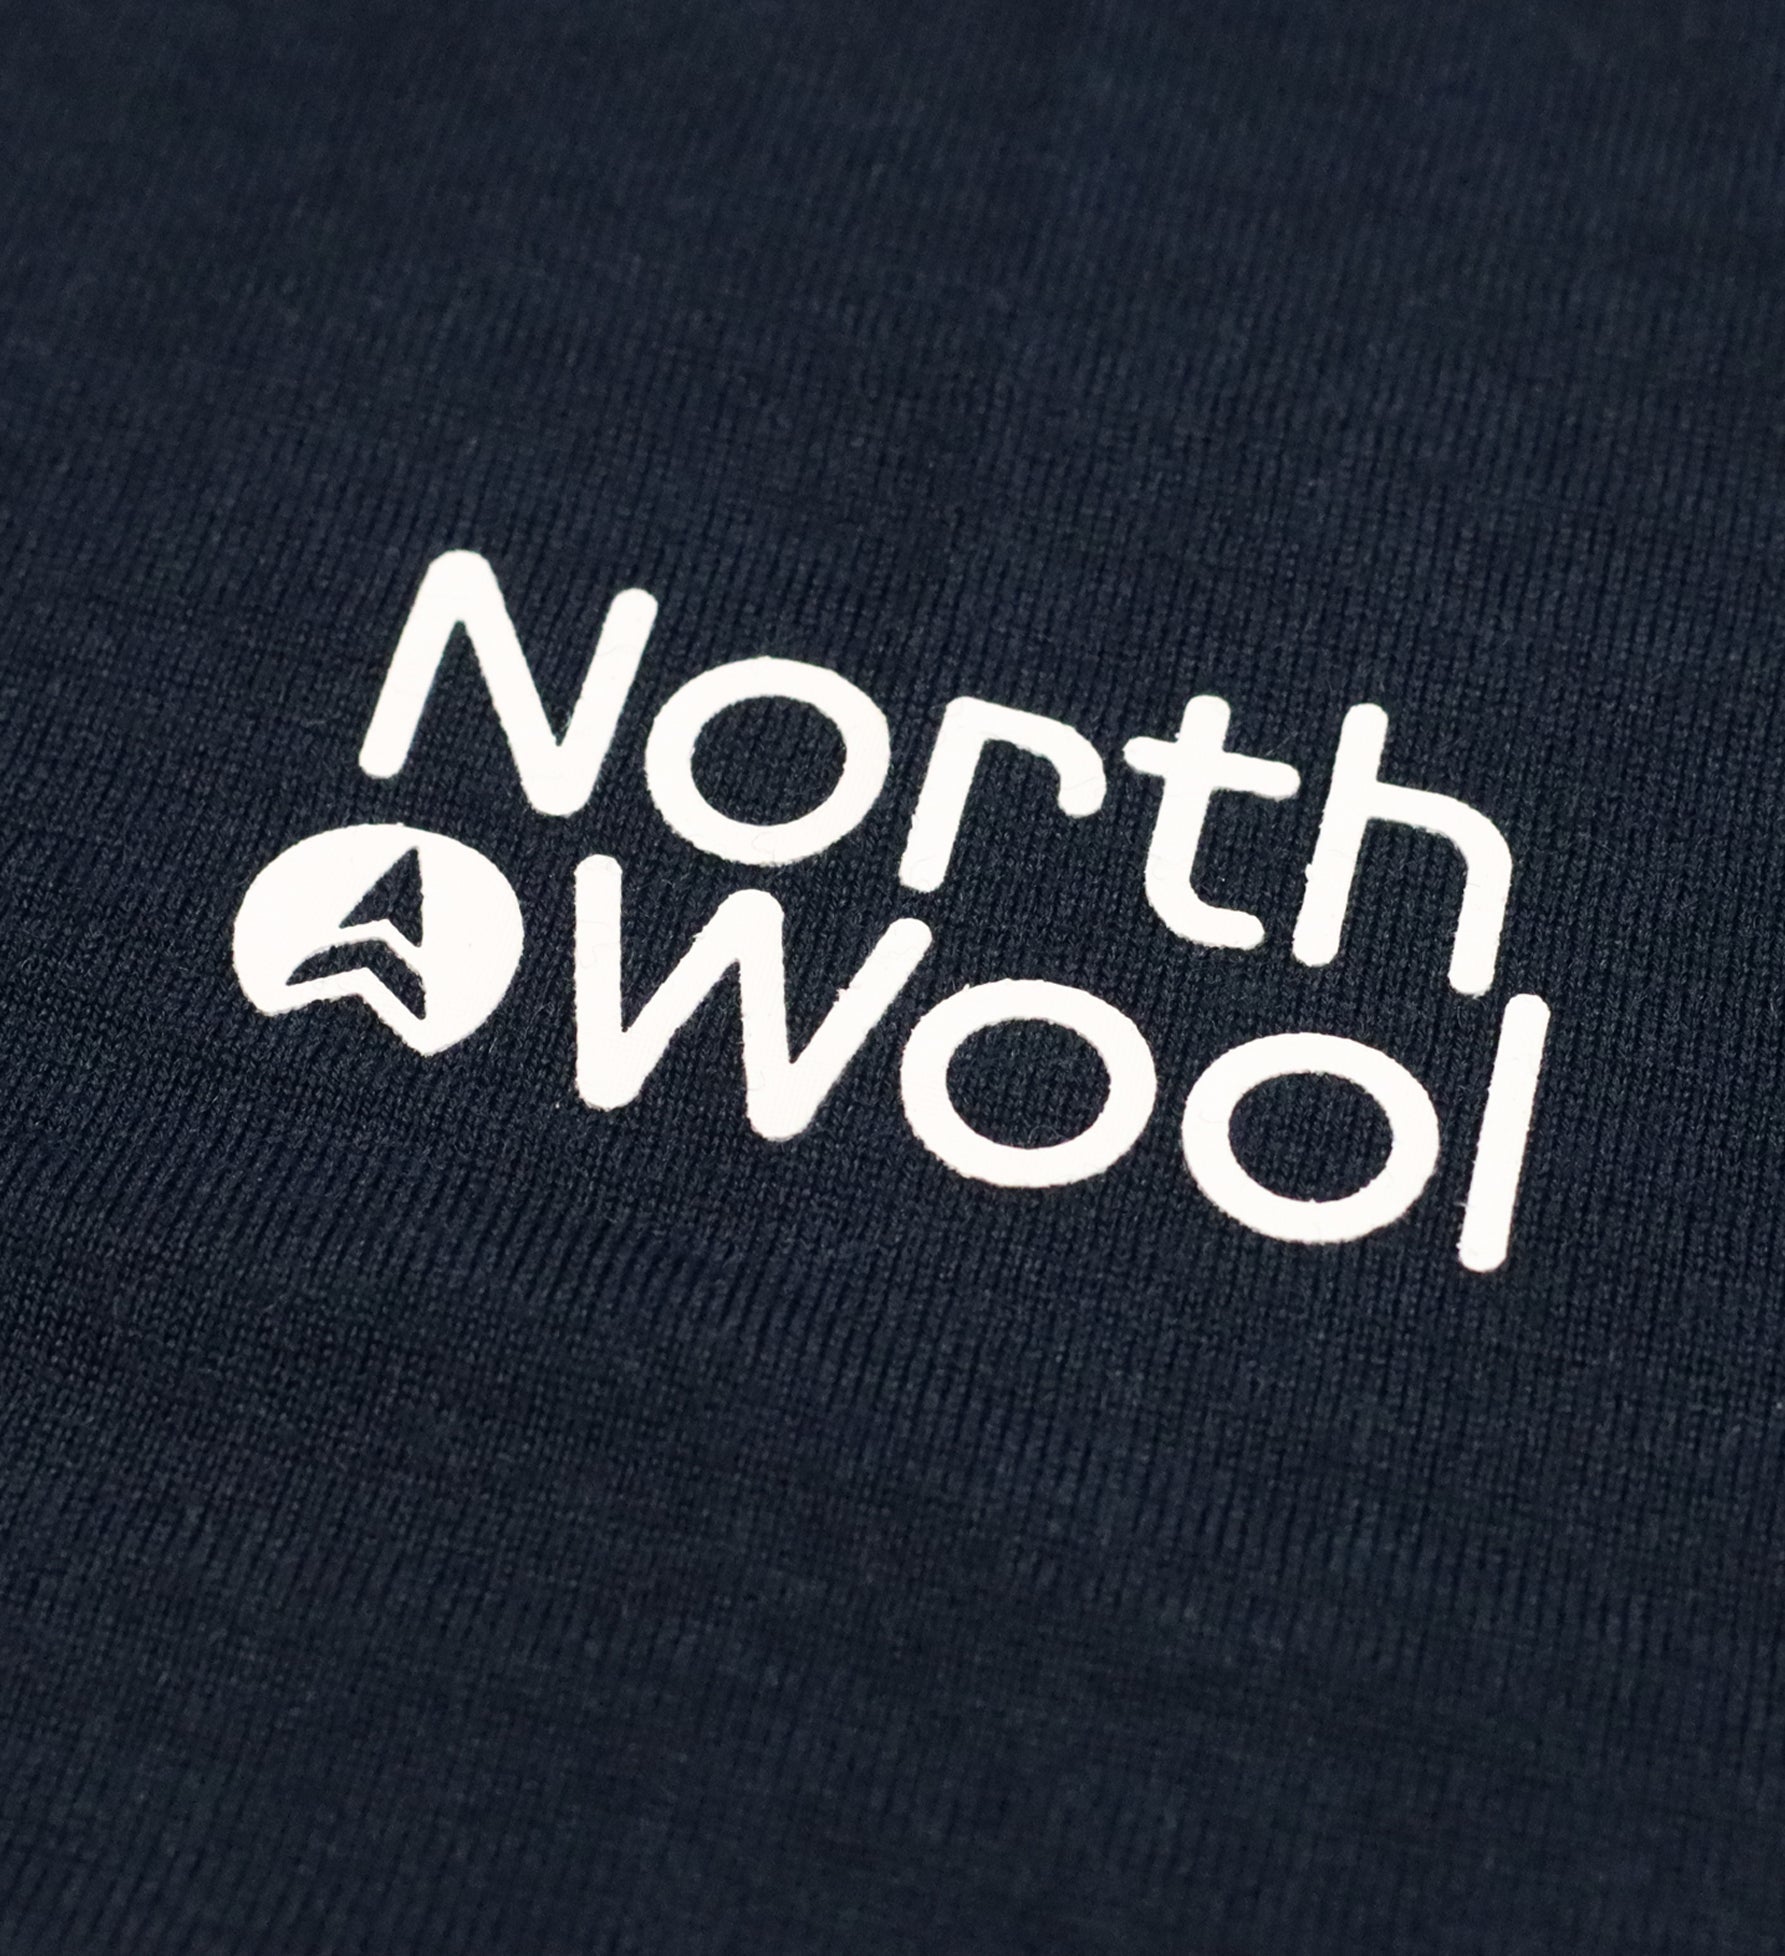 NorthWool Women's Merino Wool Thermal Baselayer Leggings with High